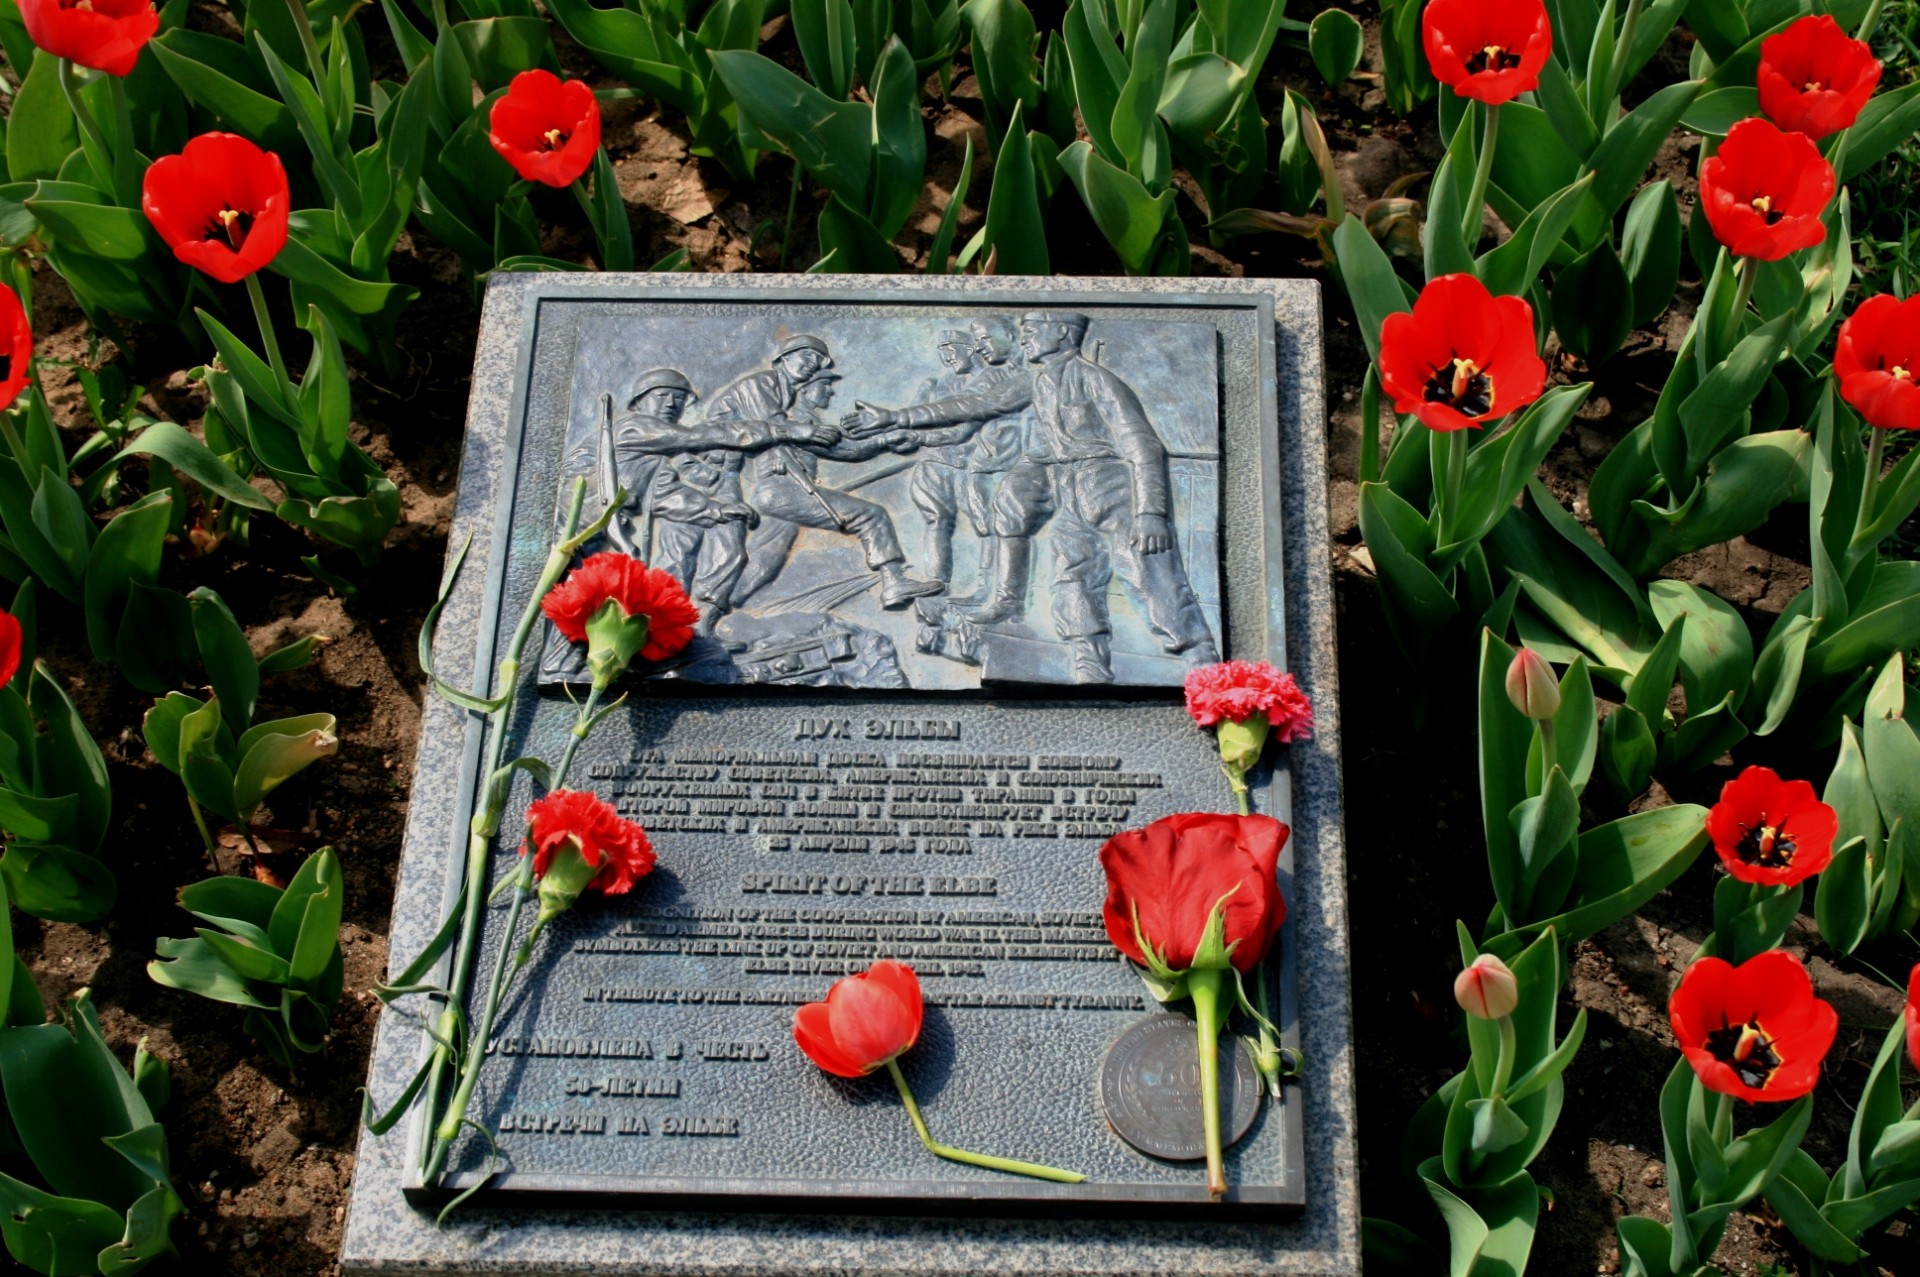 plaque memorial honouring free photo